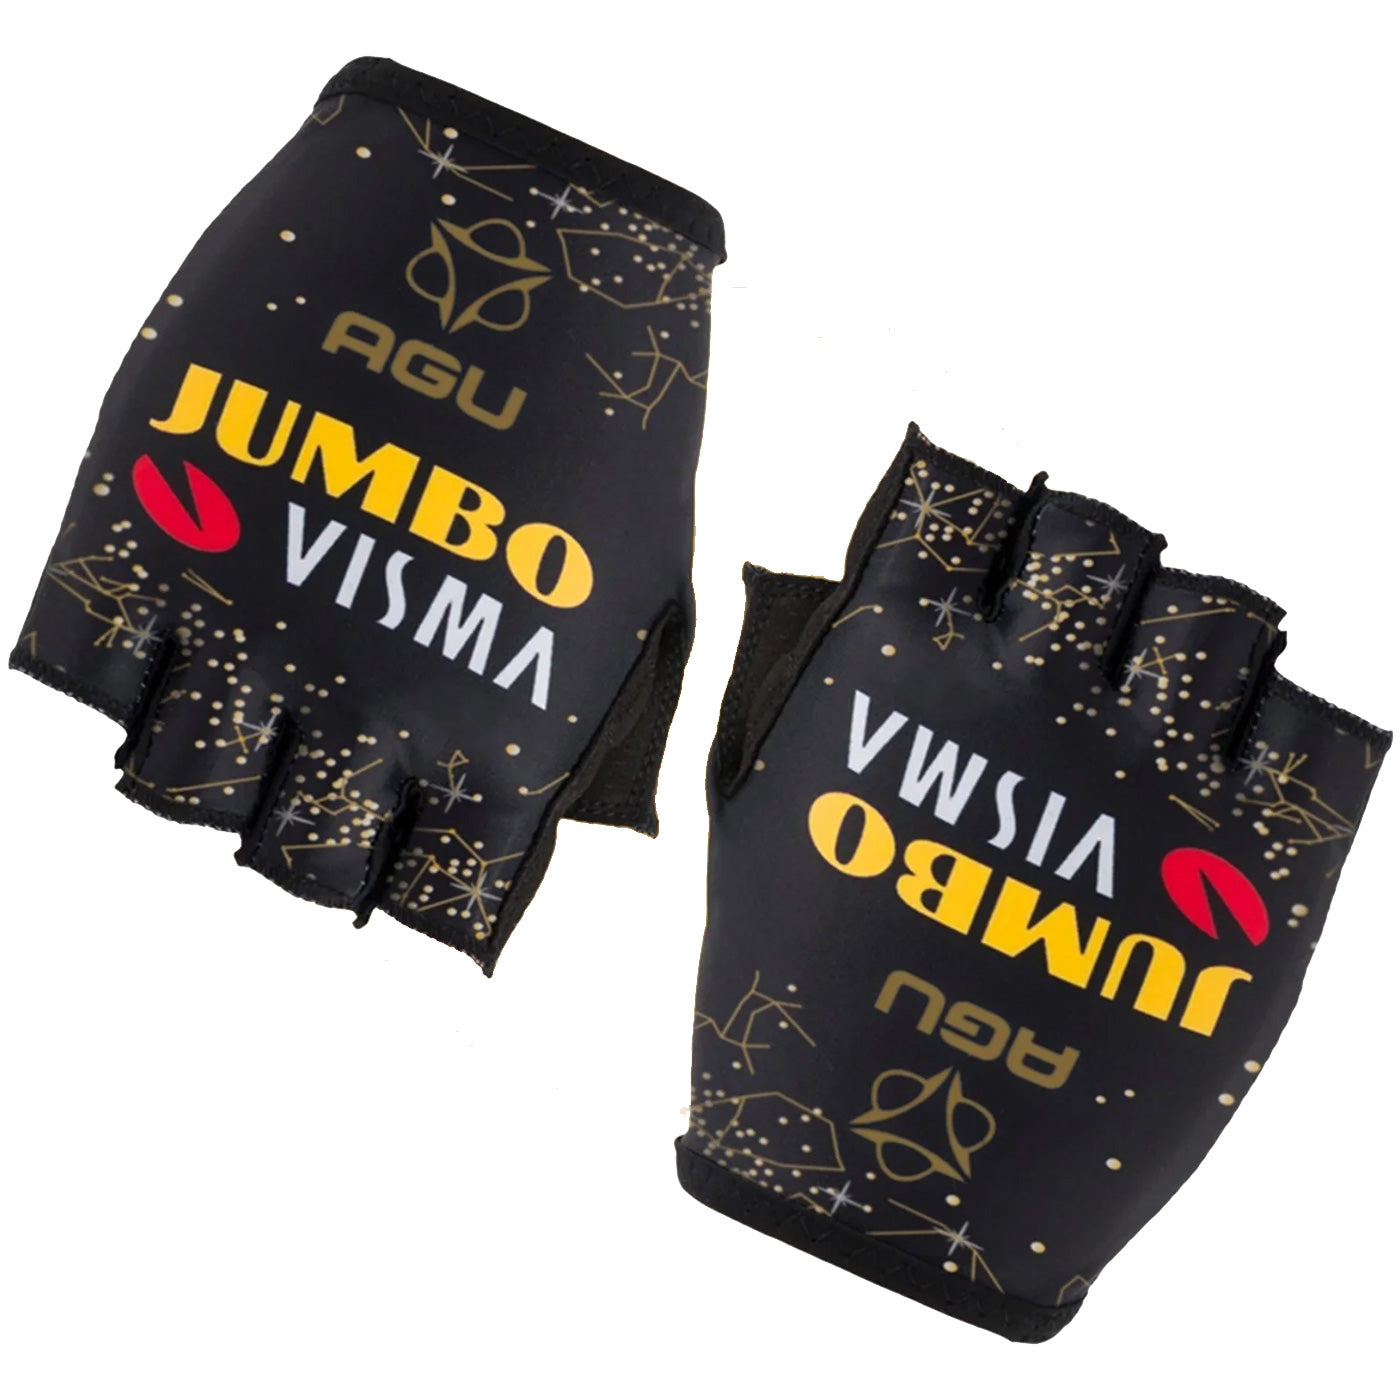 Jumbo Visma 2023 The Velodrome handschuhe - Tdf